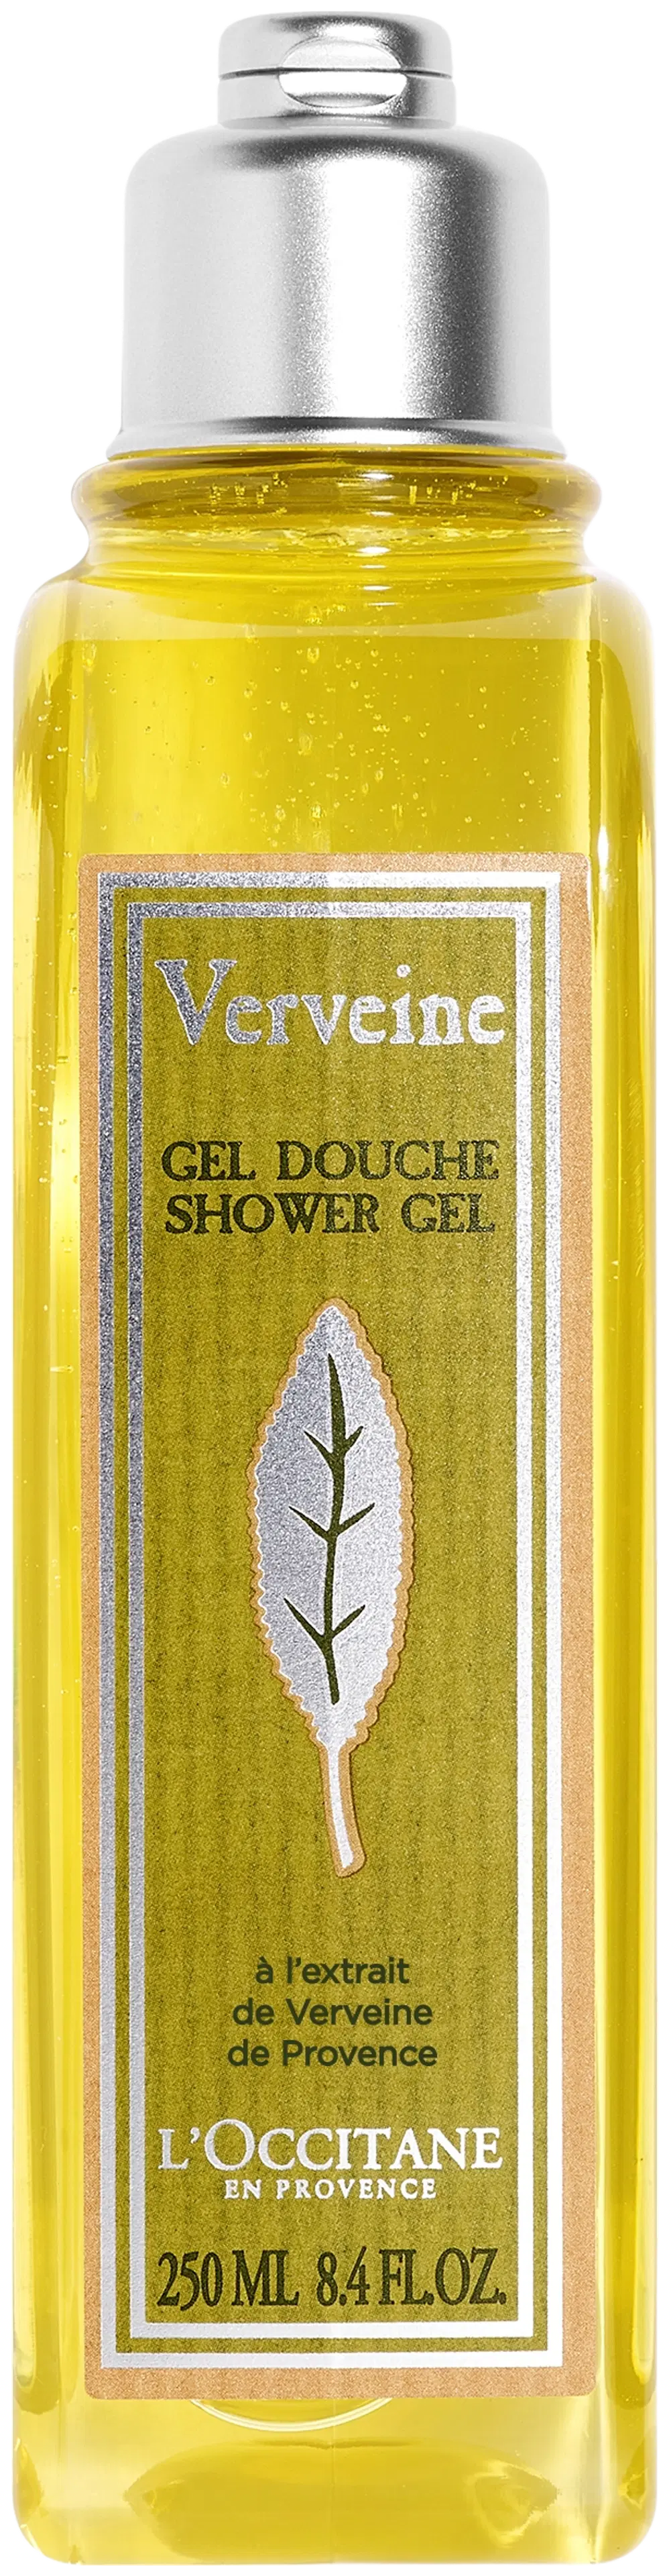 L'Occitane en Provence Verbena Shower Gel suihkugeeli 250 ml